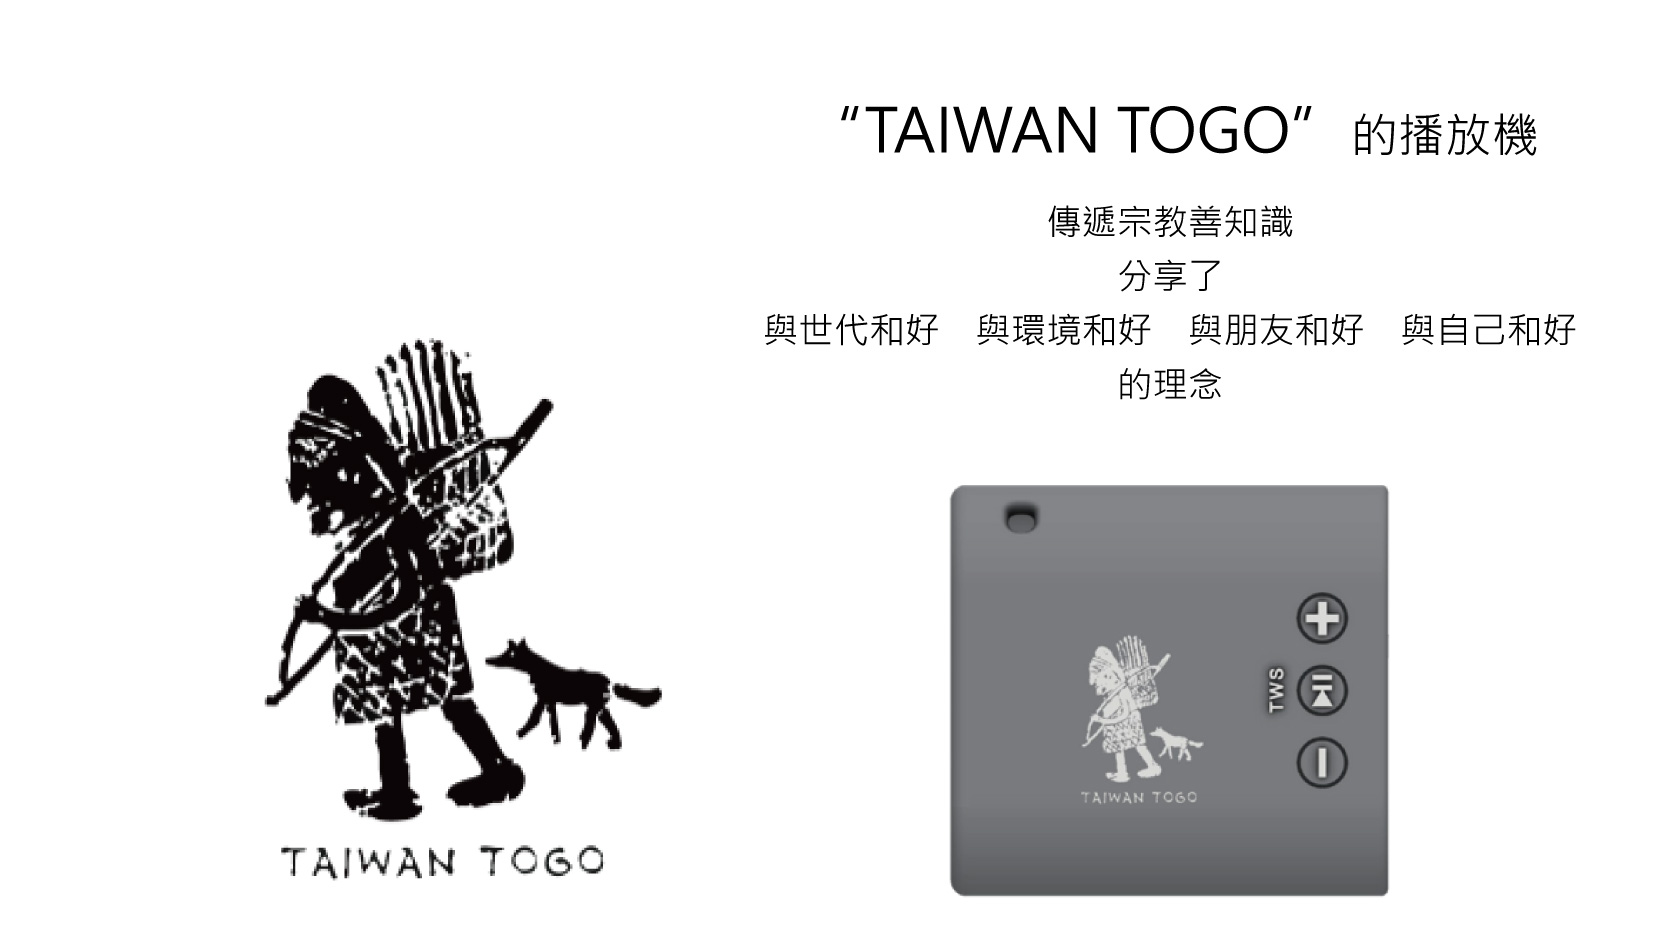 TAIWAN TOGO 播放機 / 惠中布衣文創有限公司